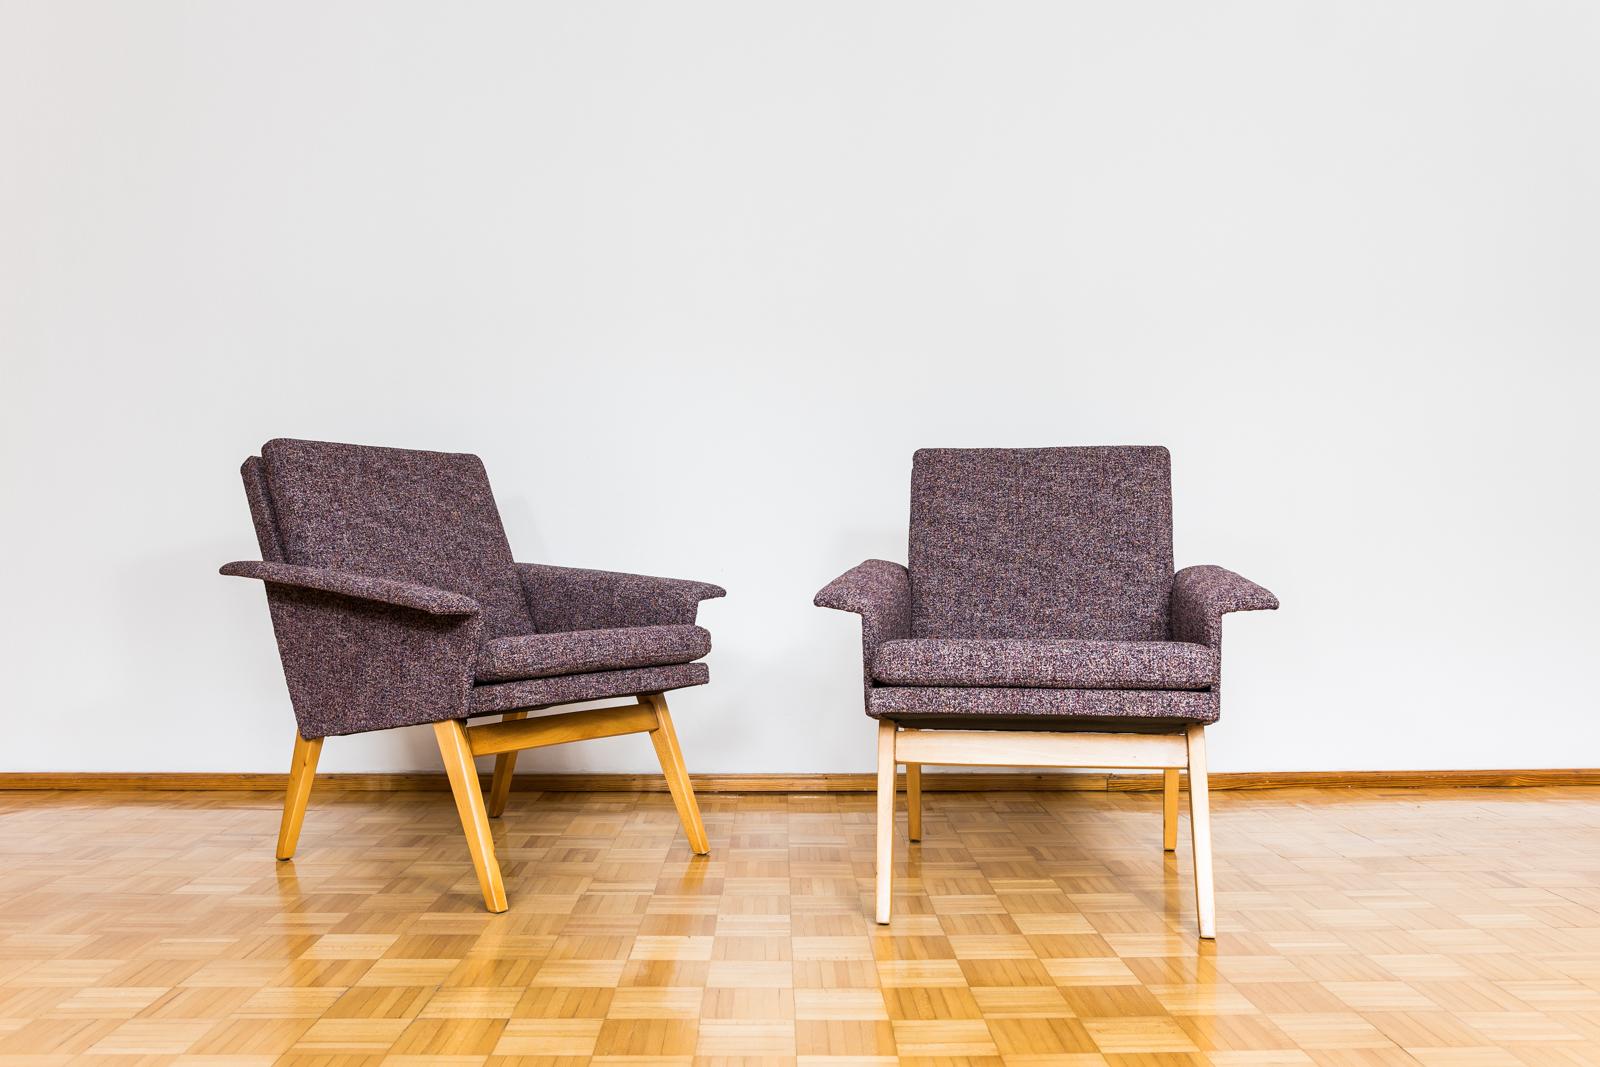 Pair of Mid-Century armchairs 1960’s Czechoslovakia.
Completely restored.